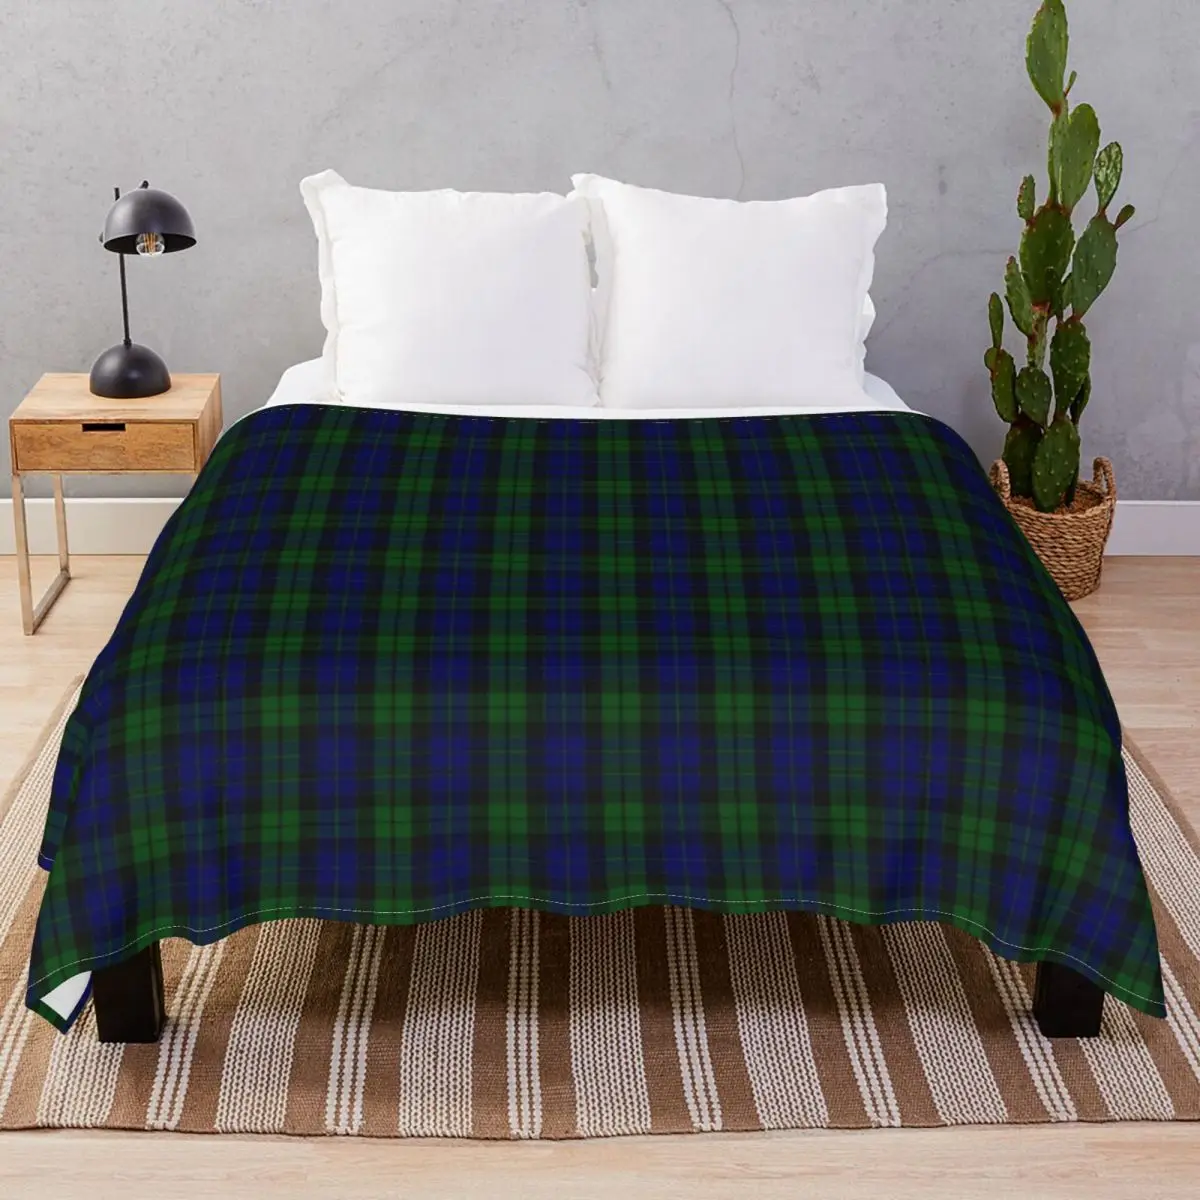 Mackay Mckay Clan Tartan Blanket Velvet Print Multifunction Throw Blankets for Bed Sofa Camp Office